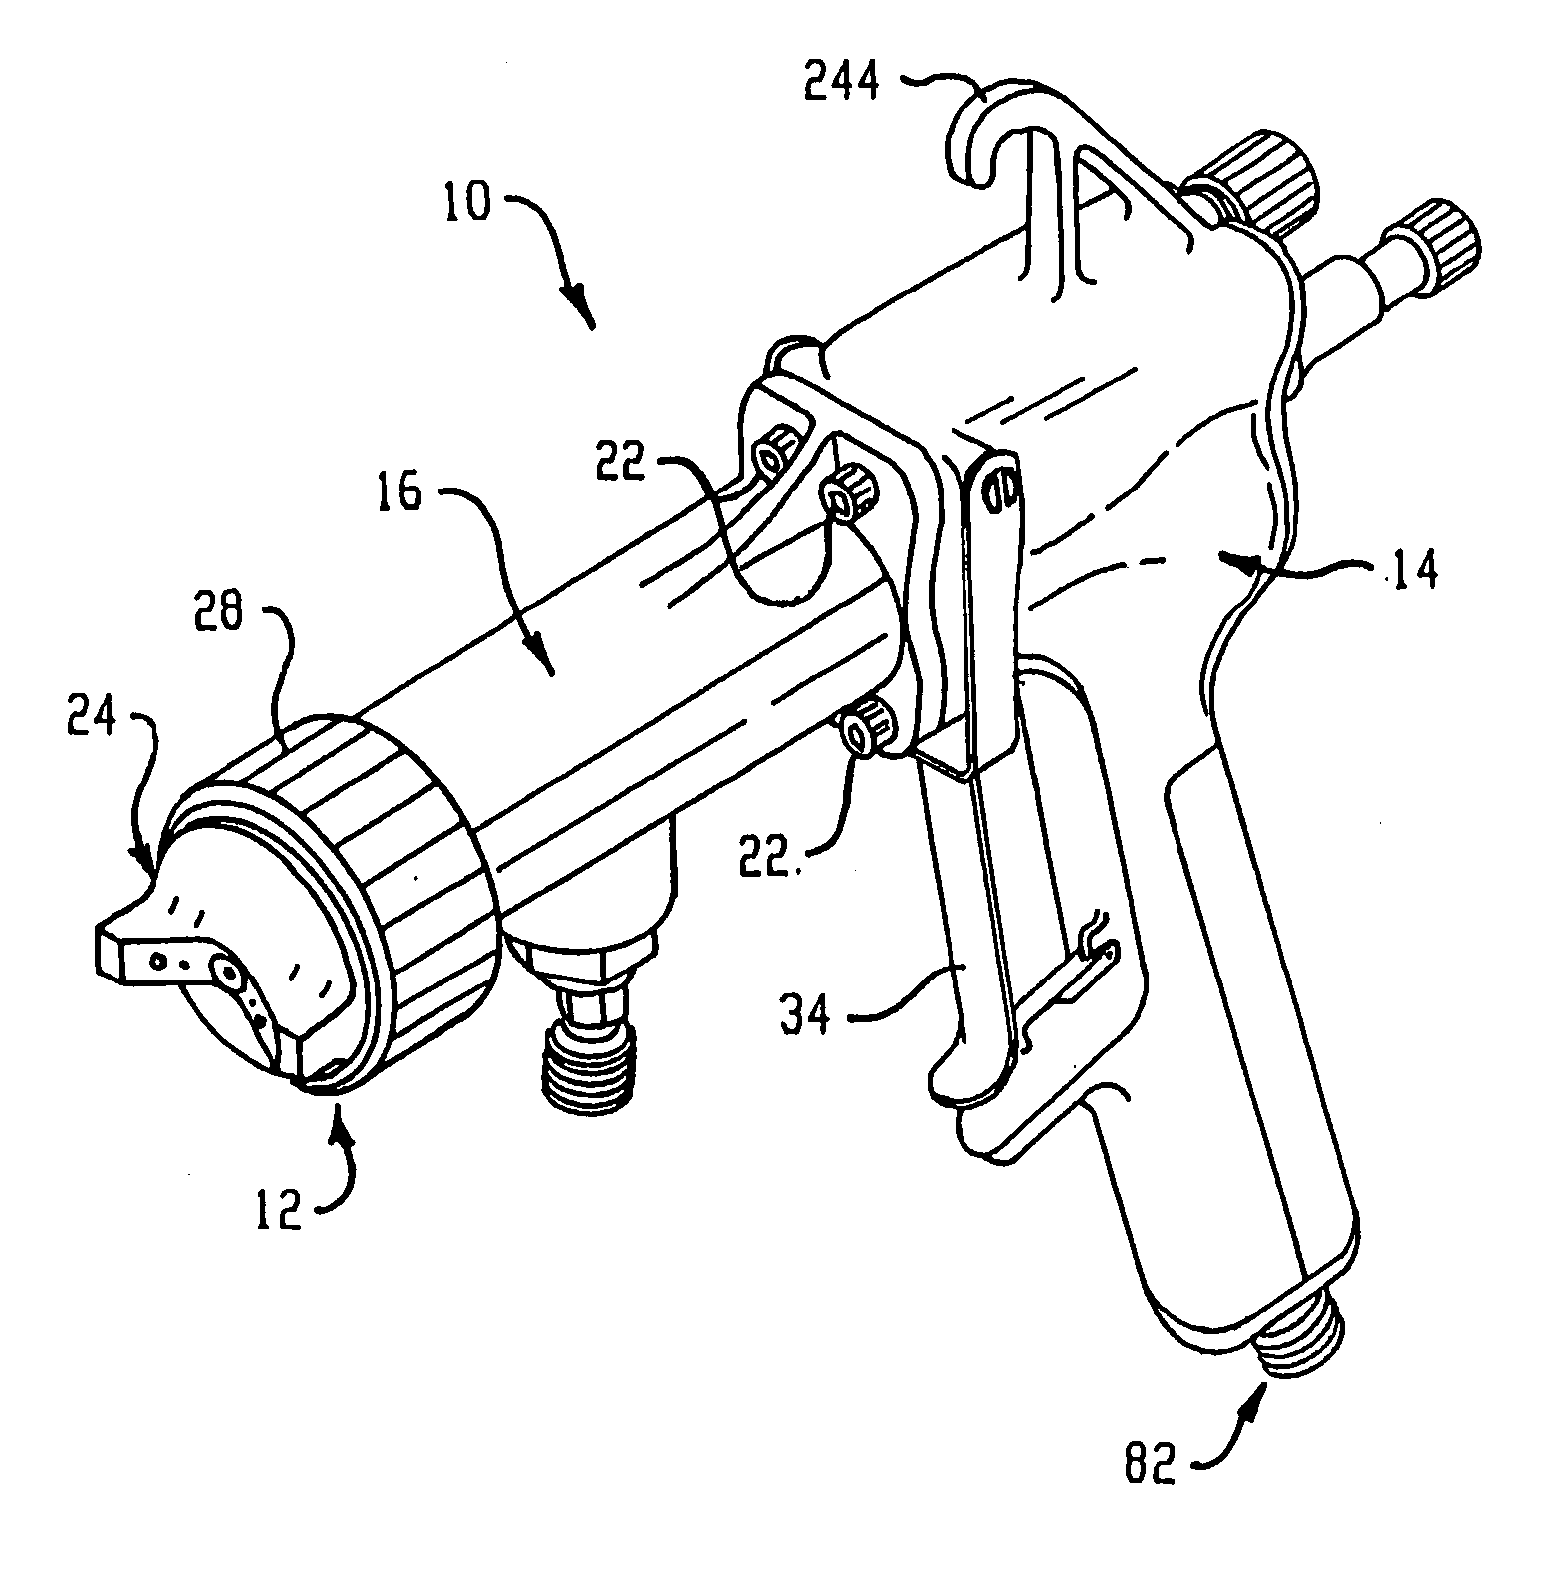 Modular fluid spray gun